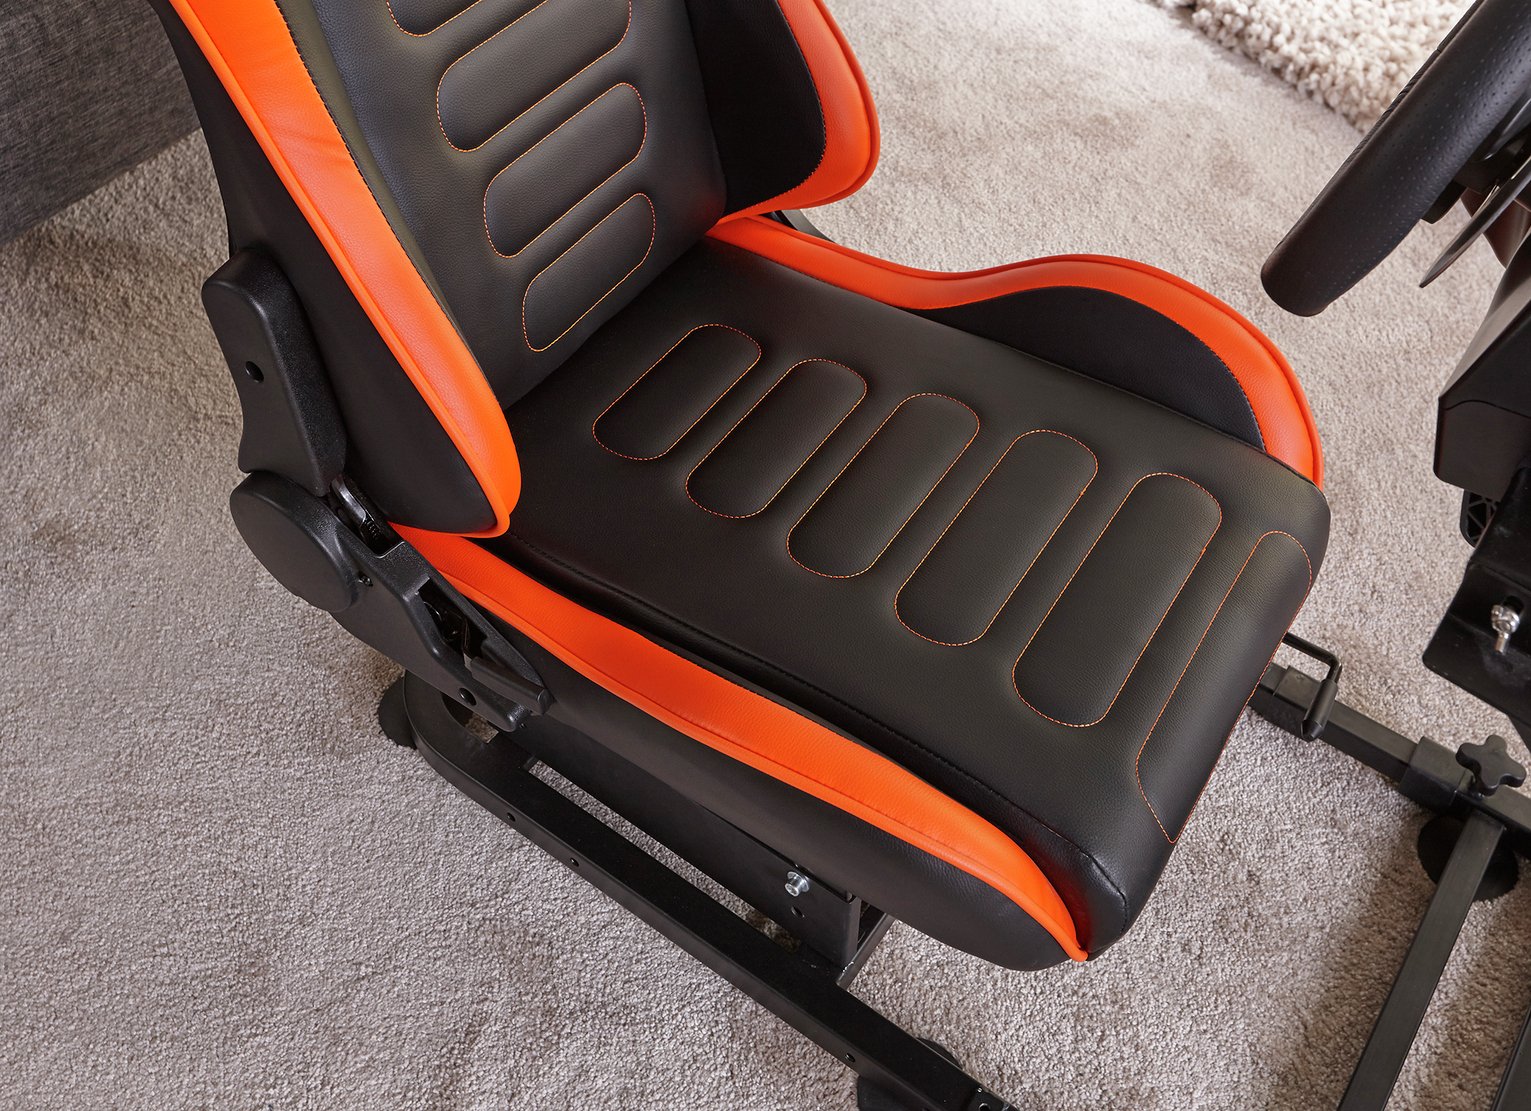 X-Rocker XR Chicane Racing Gaming Chair & Bracket Review